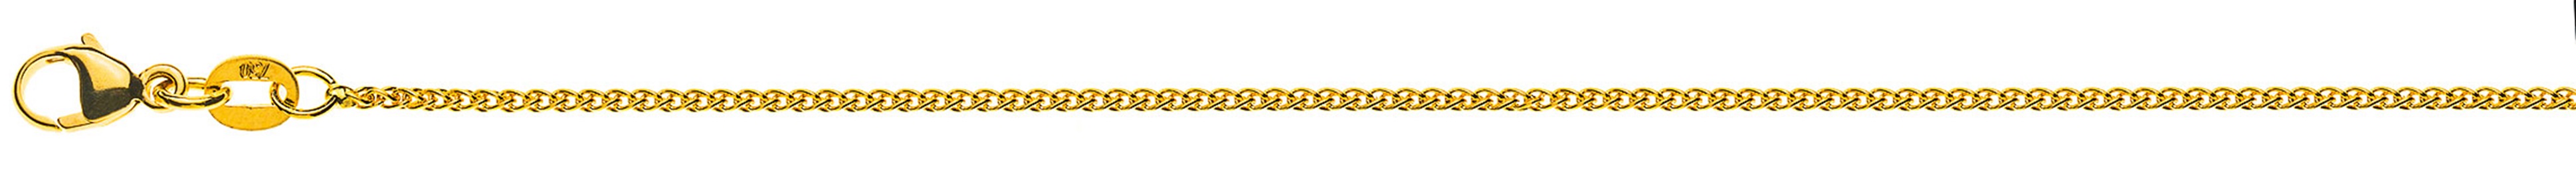 AURONOS Prestige Necklace yellow gold 18K cable chain 55cm 1.2mm